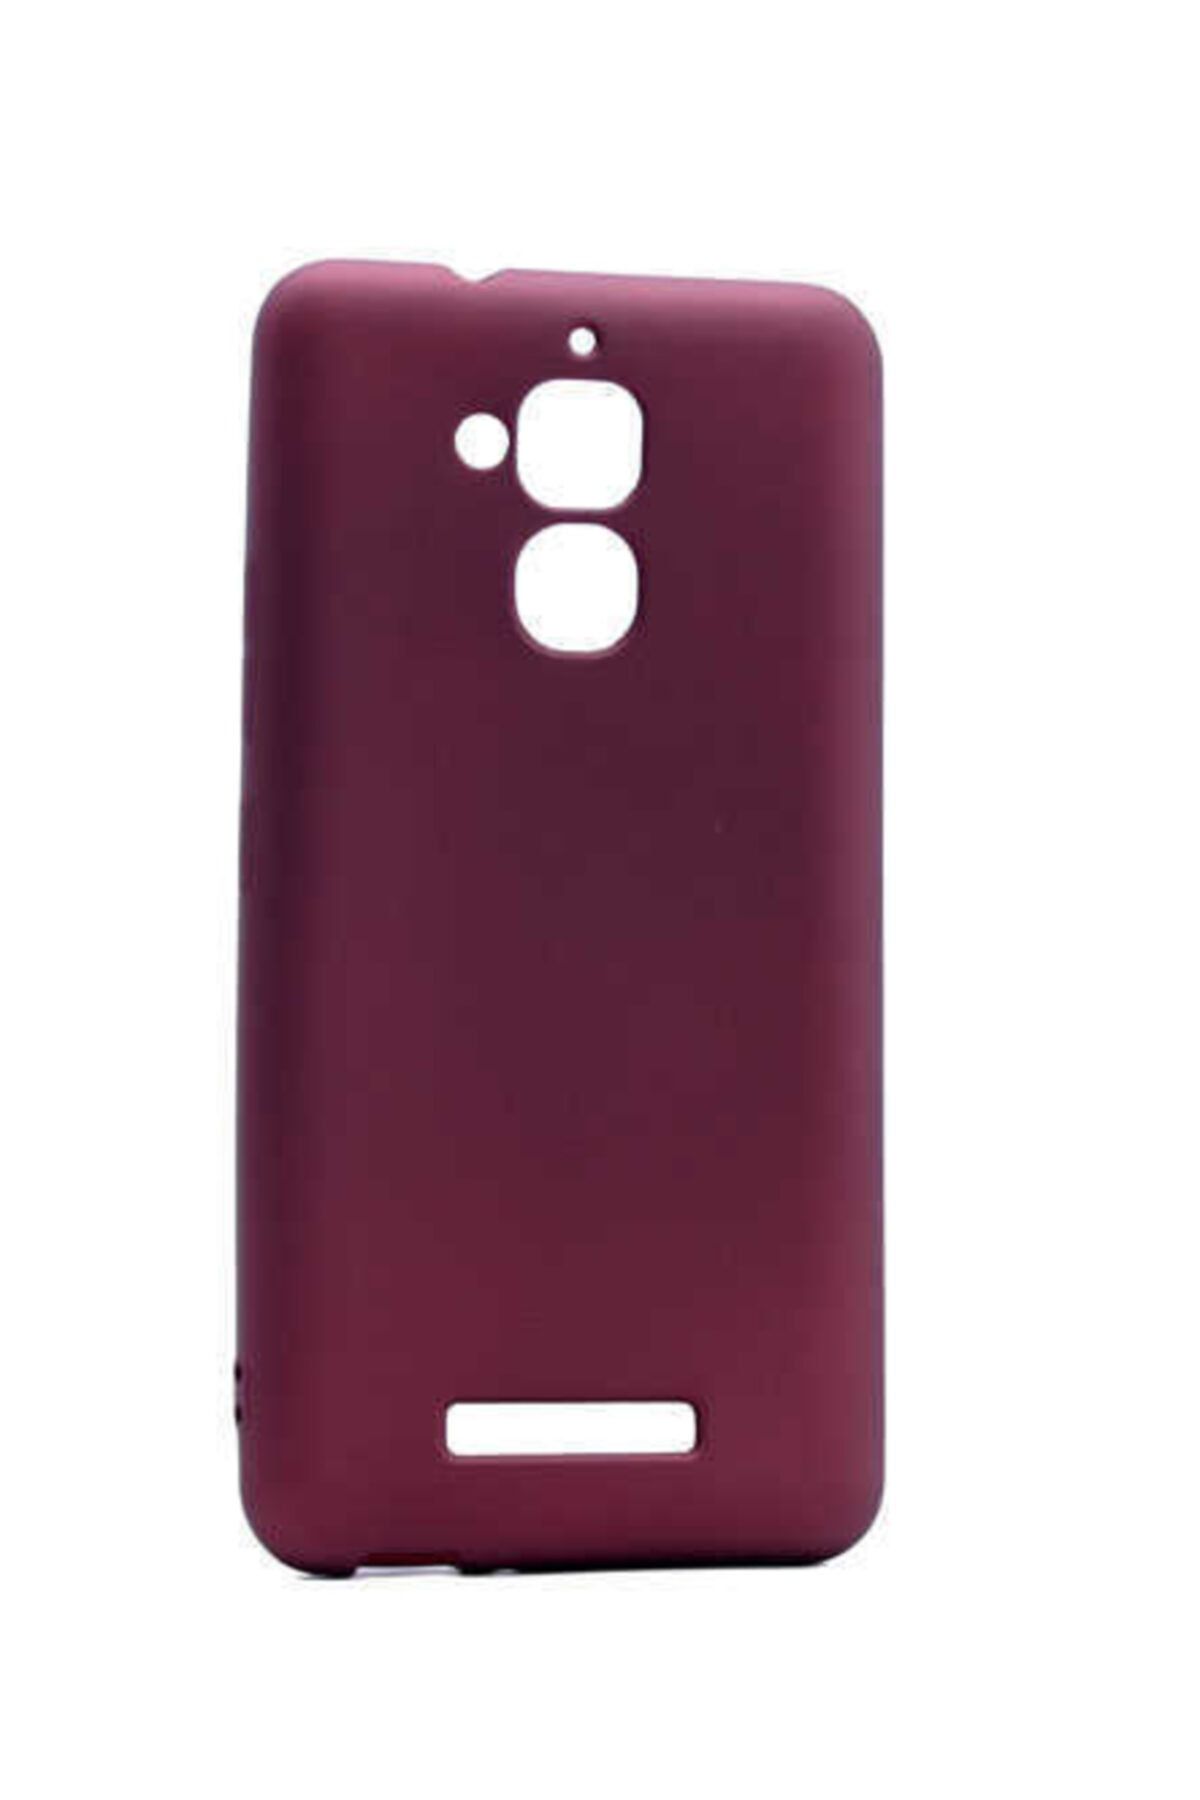 İncisoft Asus Zenfone 3 Max Zc520tl Uyumlu Ince Yumuşak Soft Tasarım Renkli Silikon Kılıf